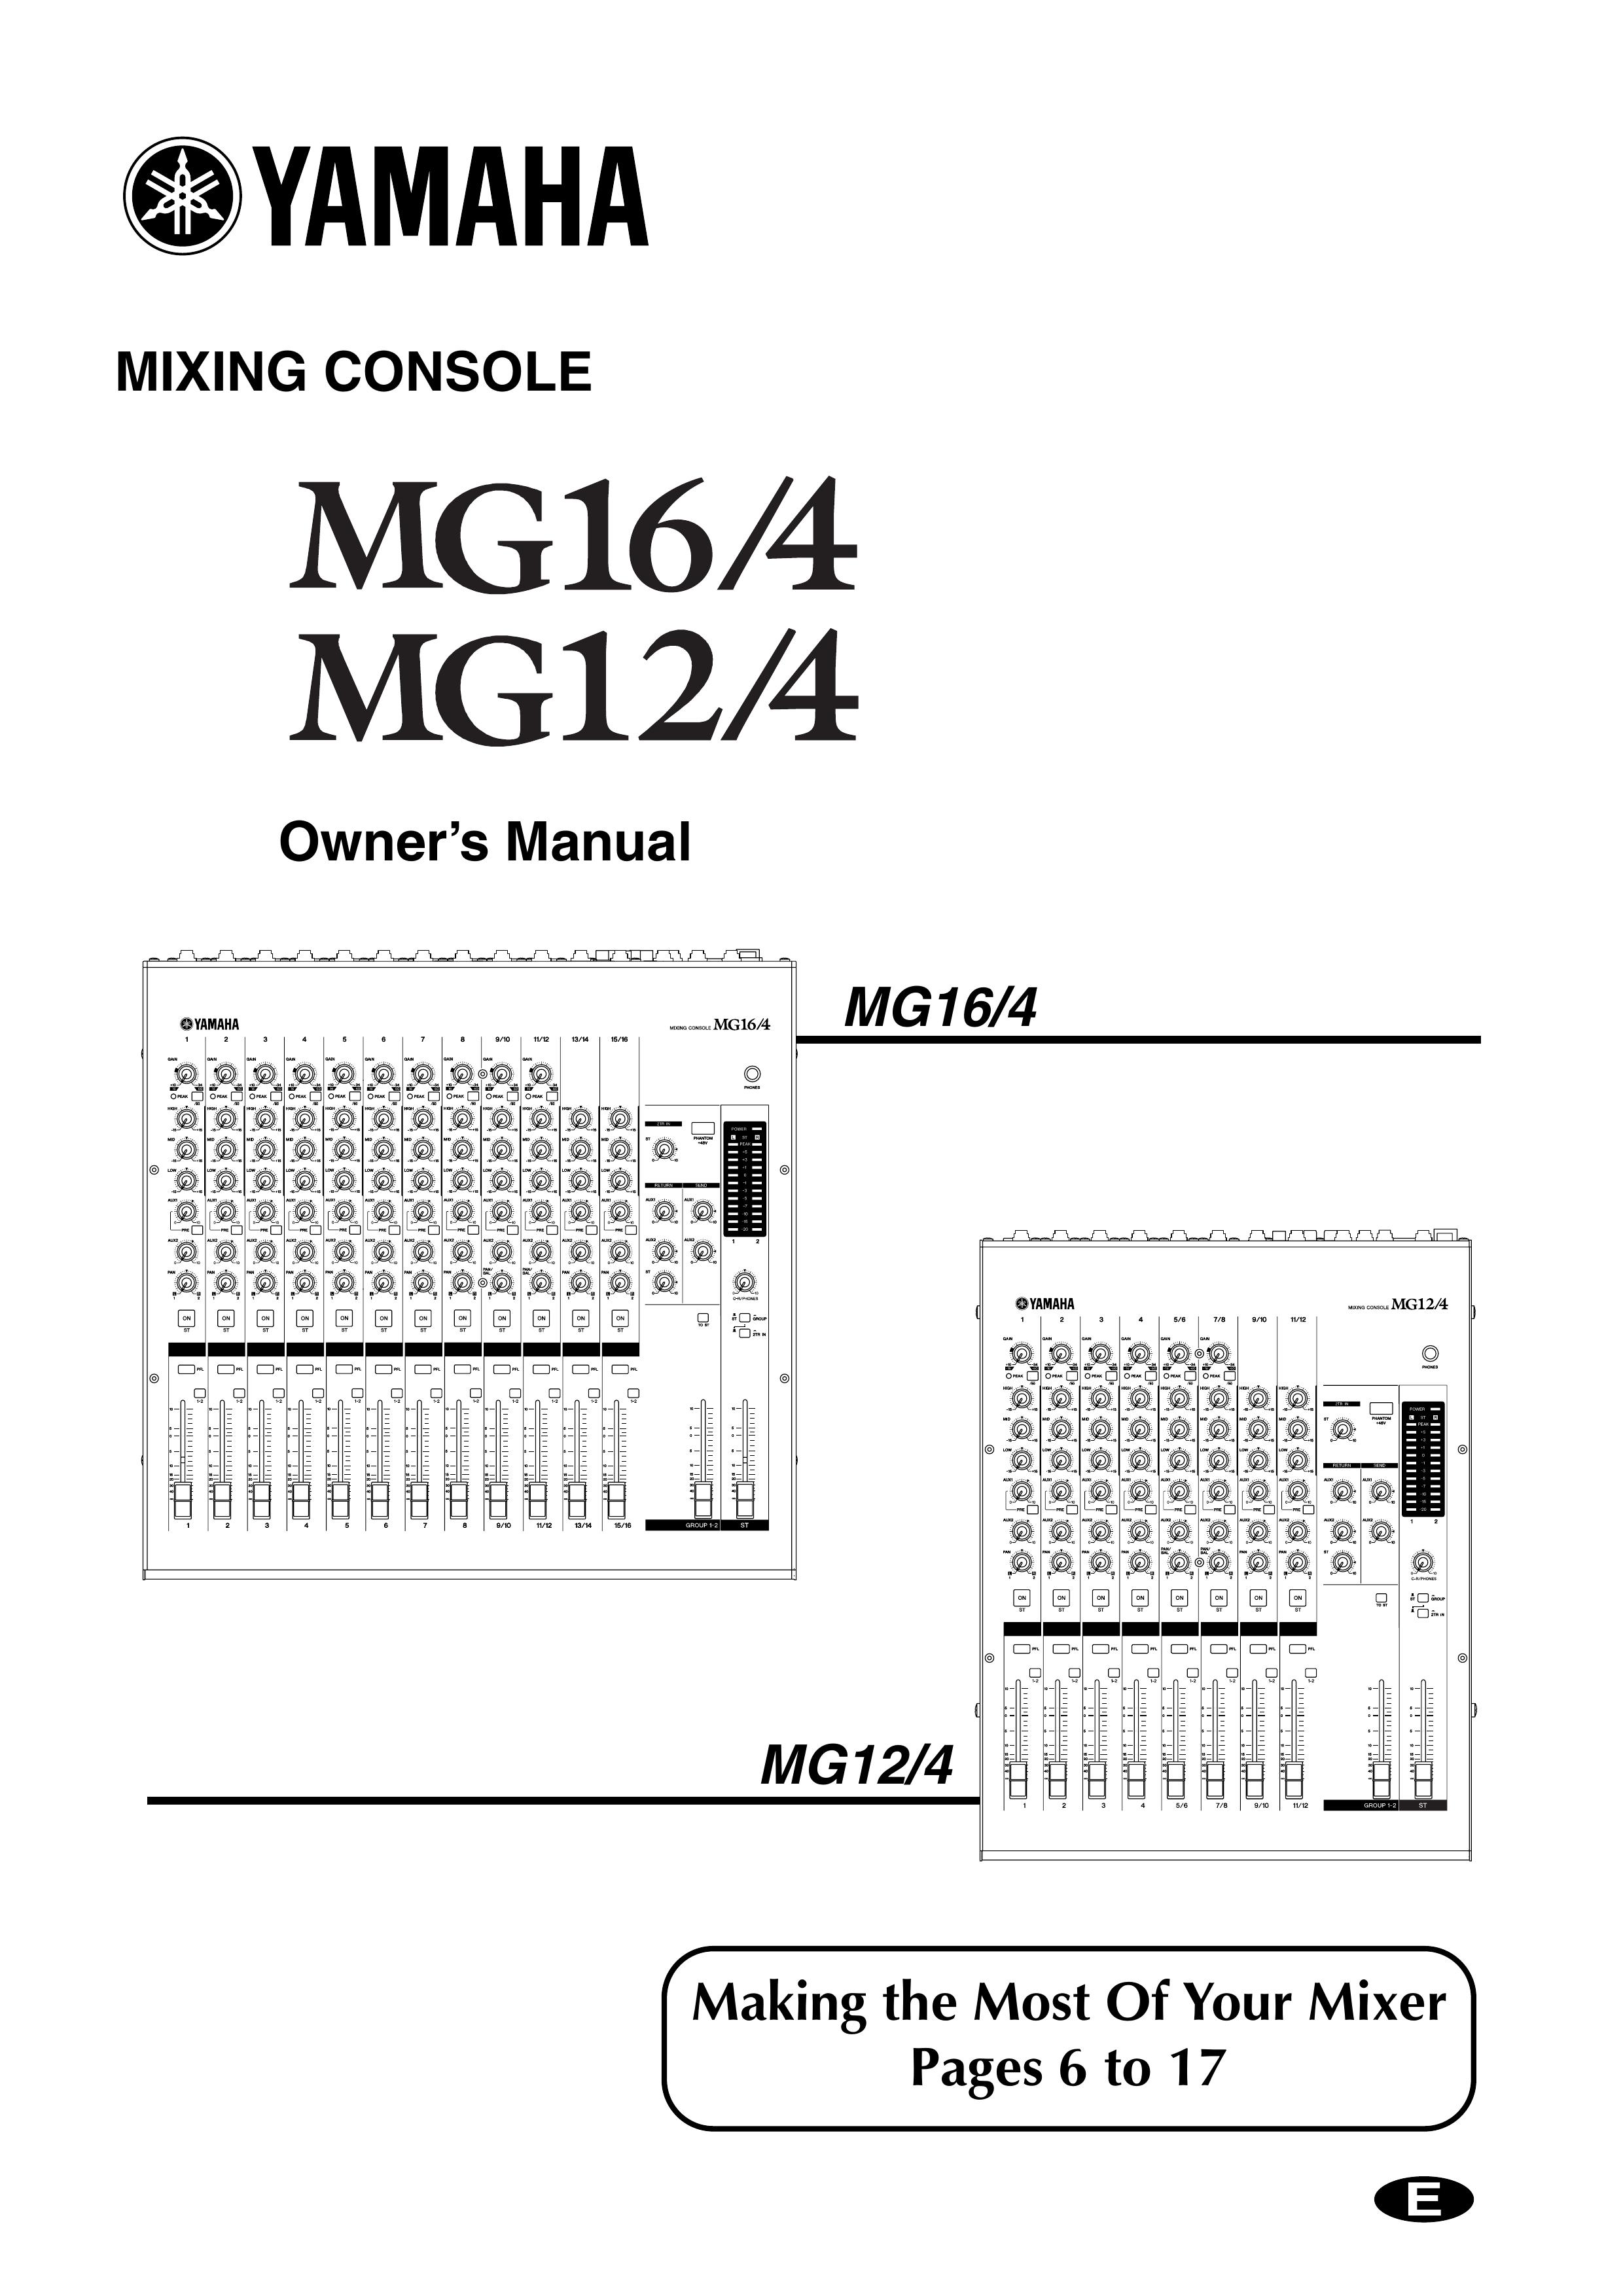 Yamaha 12/4 Musical Instrument User Manual